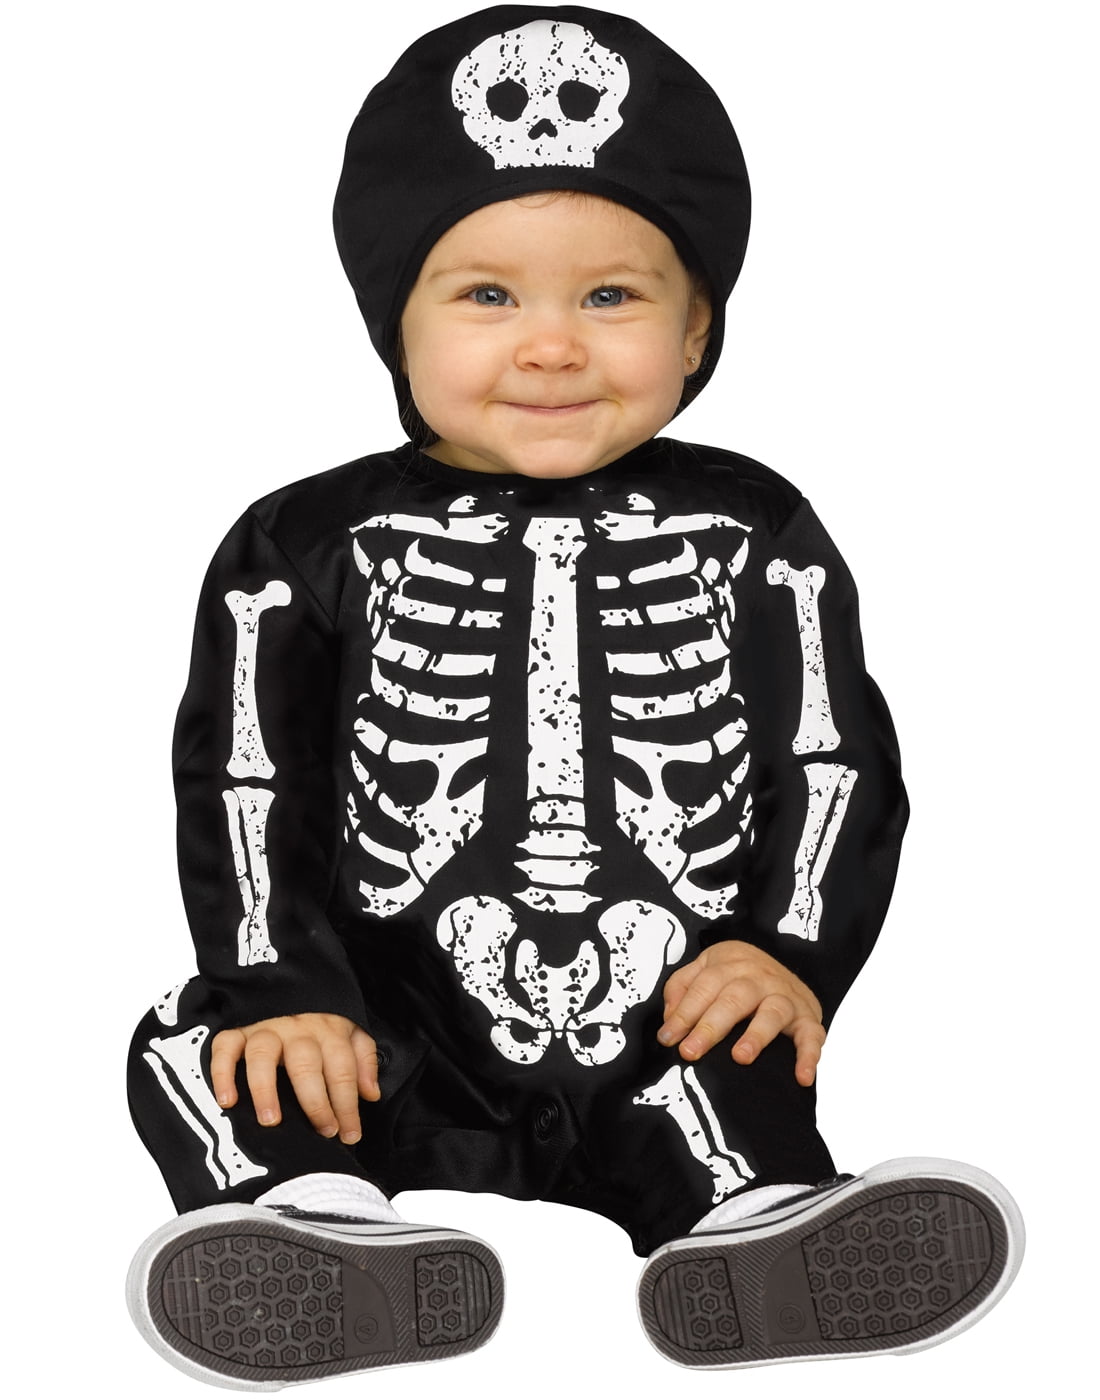 Skeleton Baby Bones Costume Toddler Halloween Fancy Dress Costume 6-24 Months 